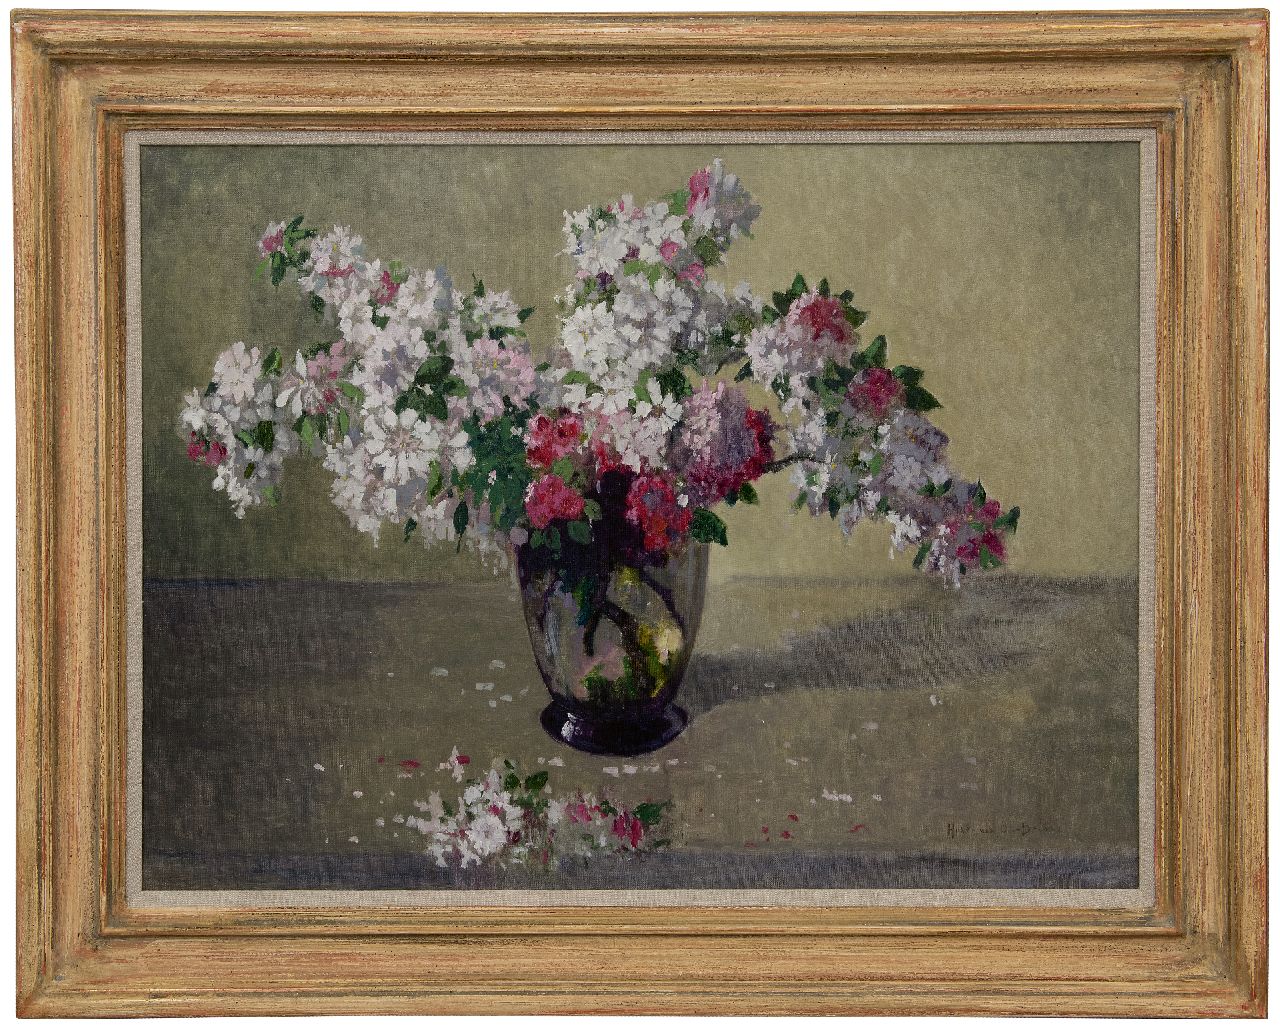 Os-Delhez (Hendrik van Os) H. van | Hendrik 'Henri' van Os-Delhez (Hendrik van Os) | Paintings offered for sale | Apple blossom, oil on canvas 59.9 x 79.8 cm, signed l.r. and without frame